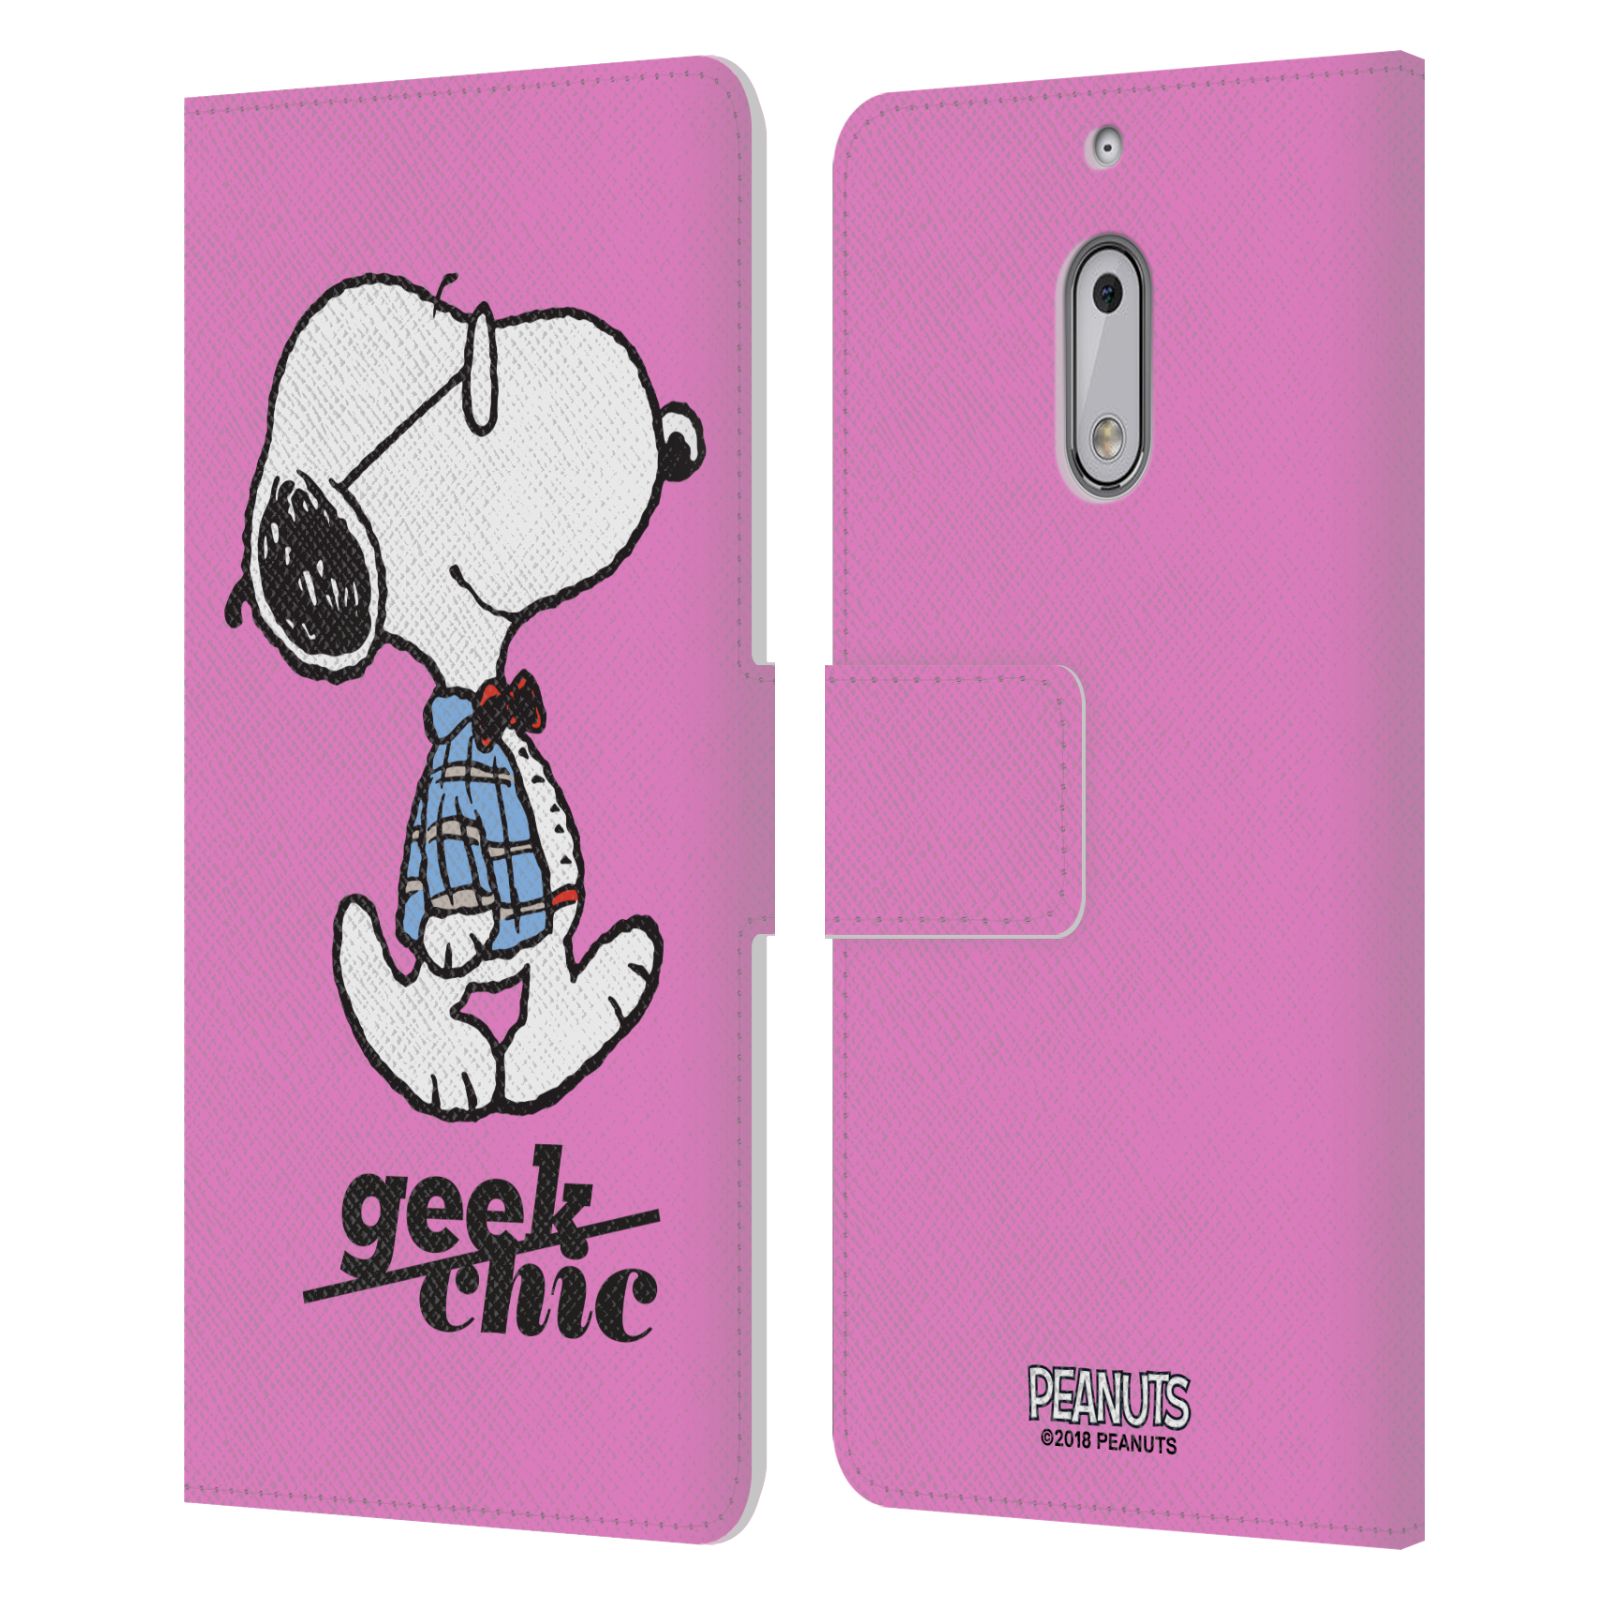 Pouzdro na mobil Nokia 6 - Head Case - Peanuts - růžový pejsek snoopy nerd